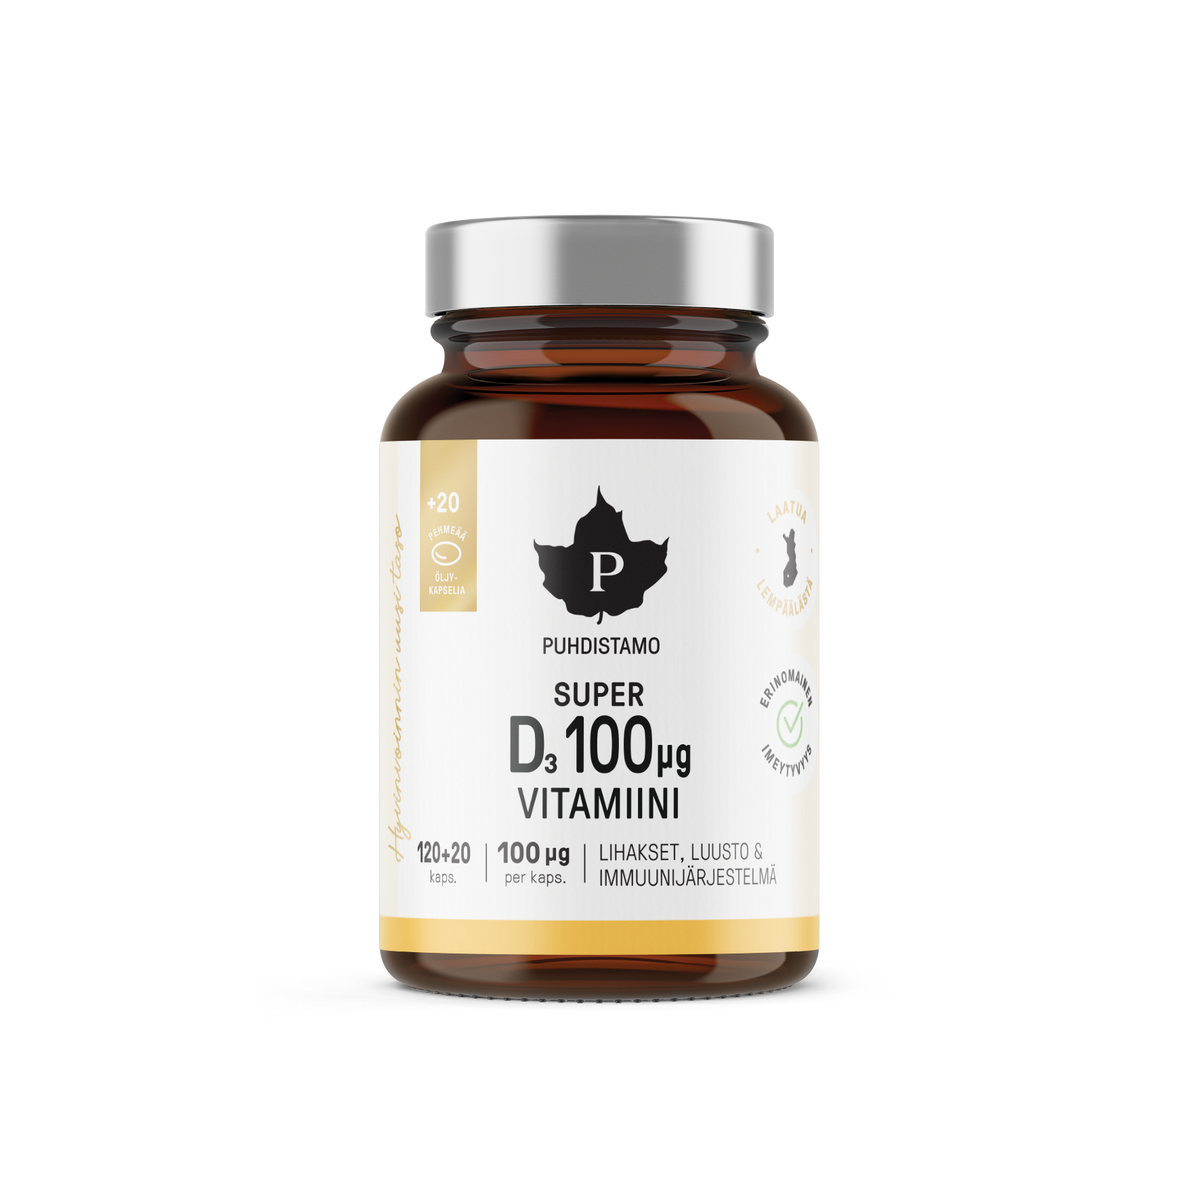 Puhdistamo Super D-Vitamiini 100 μg Kampanjapakkaus 120+20 kaps.